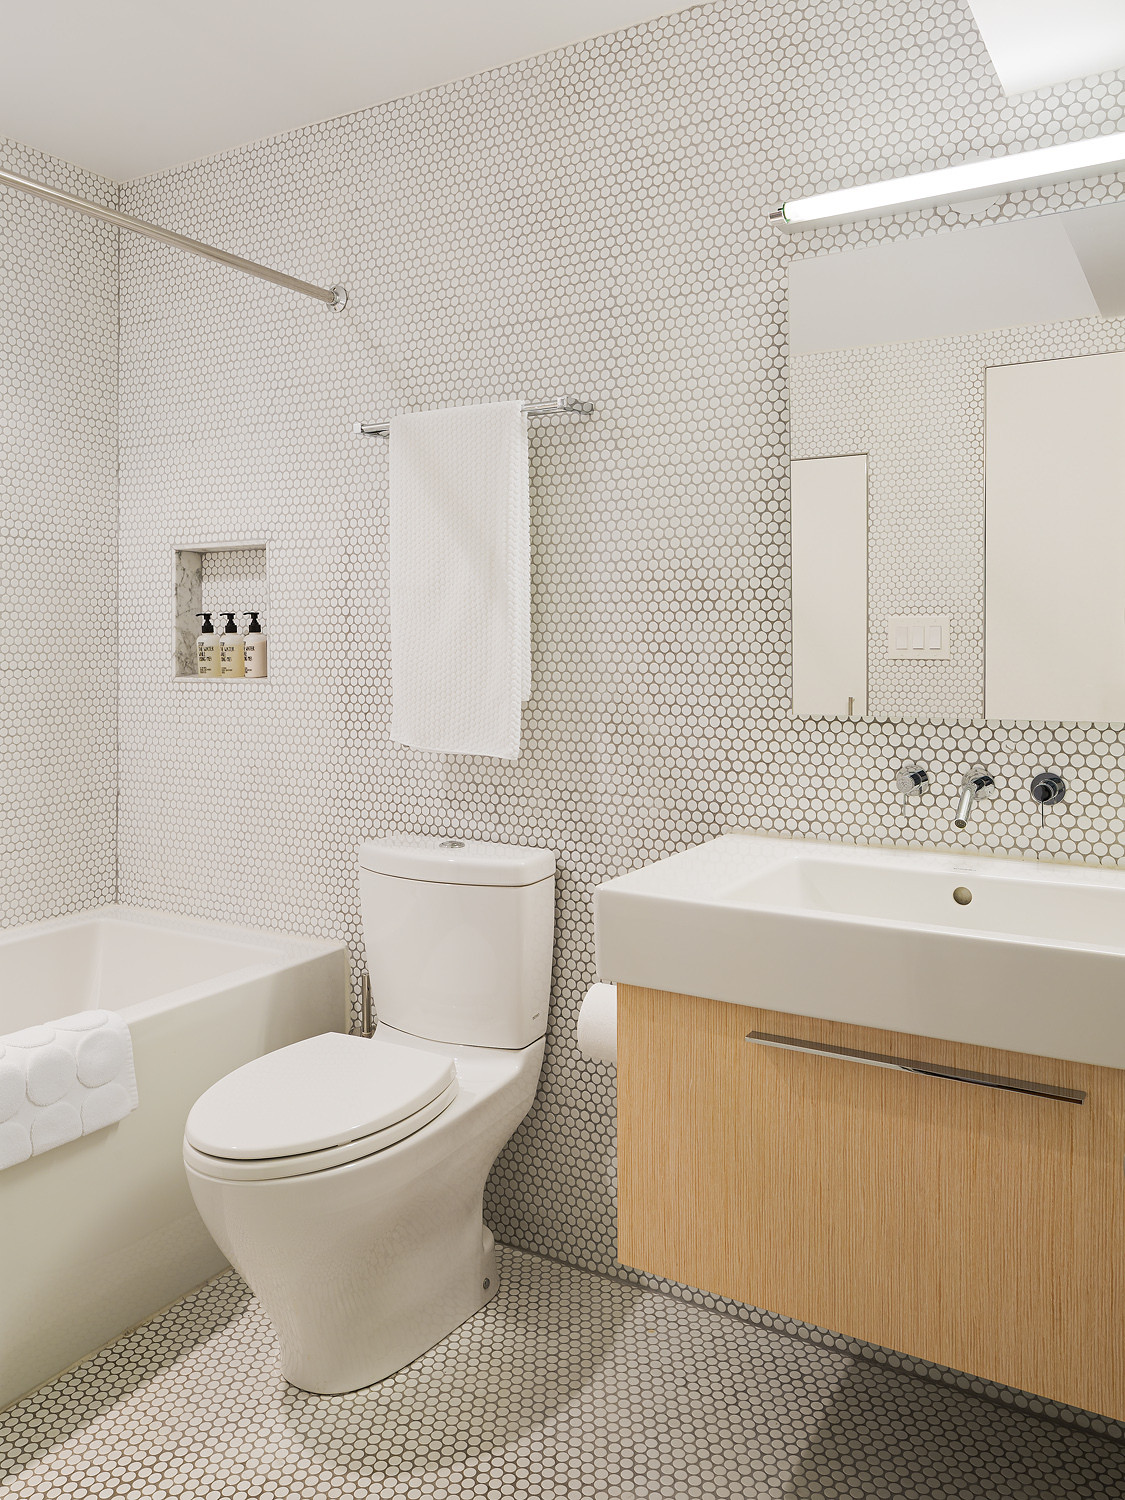 Hex Tiles Bathroom Floor
 30 Ideas on using hex tiles for bathroom floors